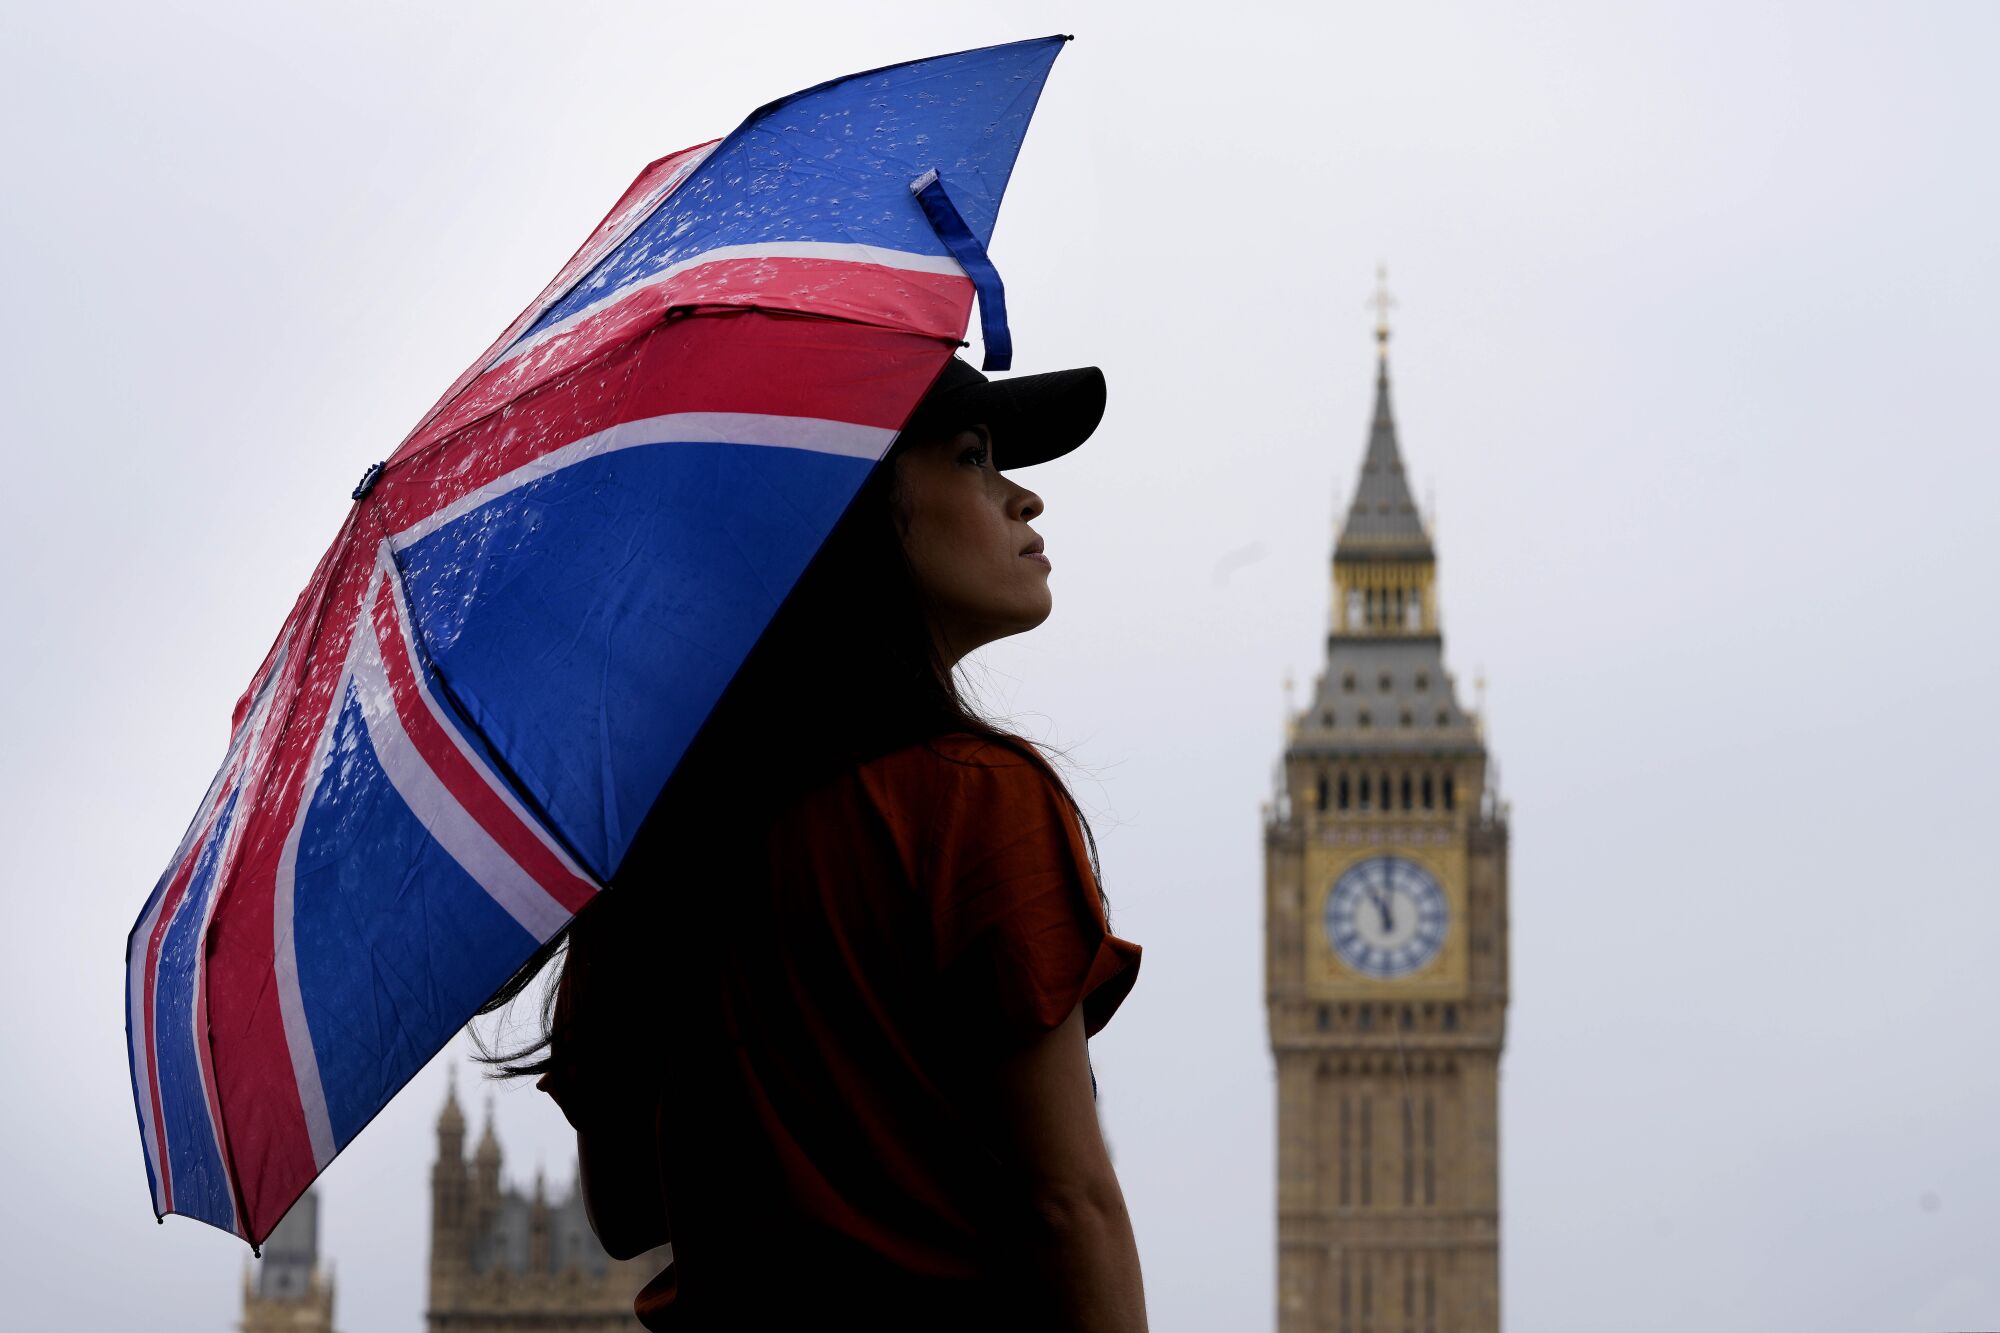 A woman uses an umbrella near Big Ben.